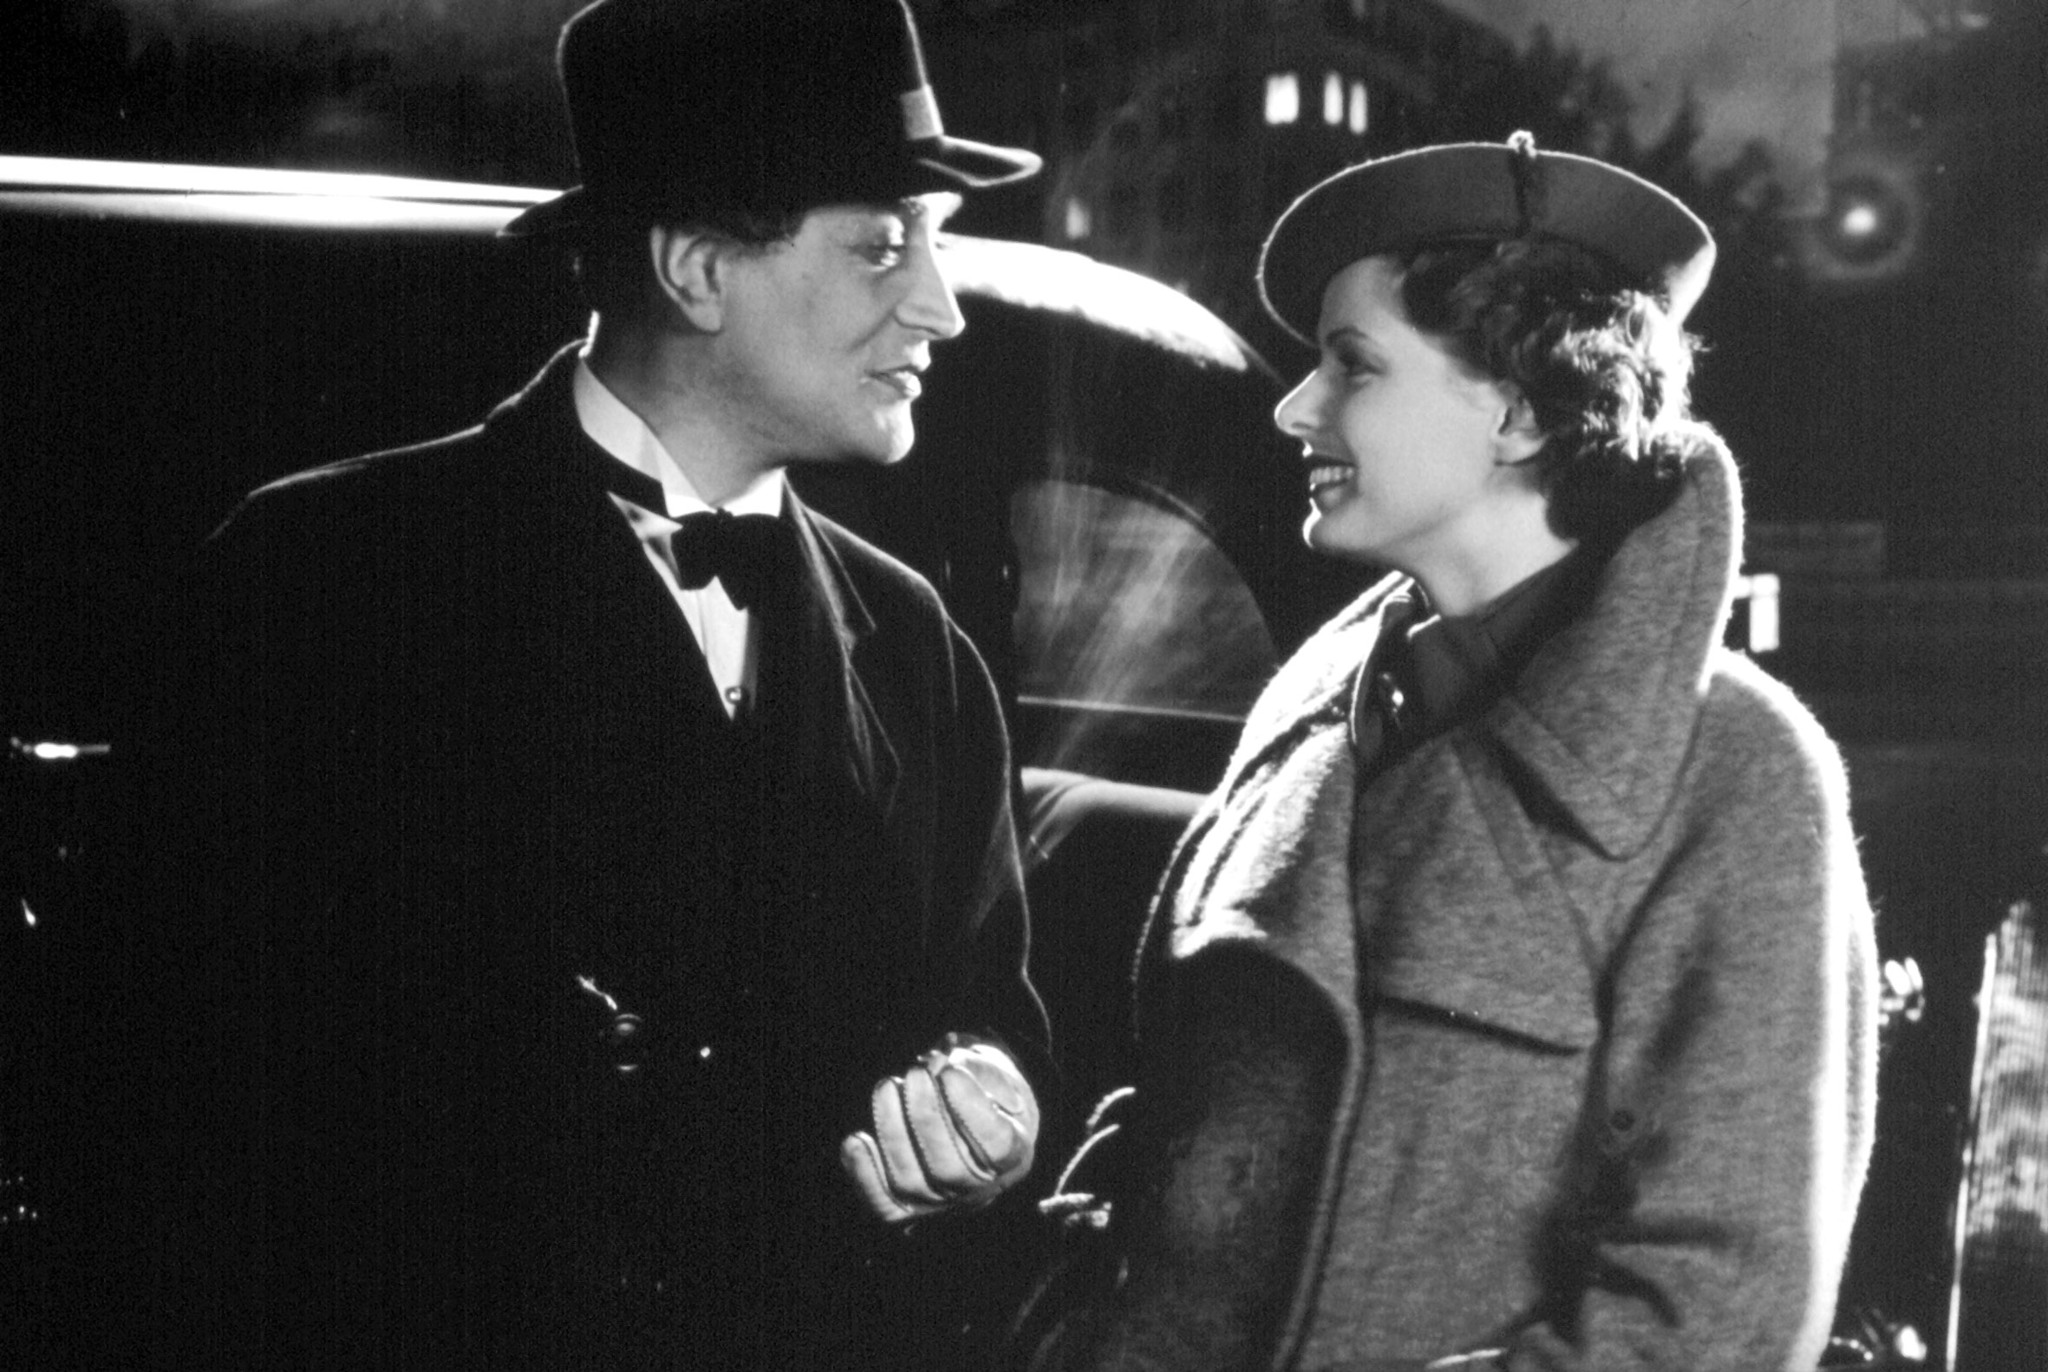 Still of Ingrid Bergman and Gösta Ekman in Intermezzo (1936)